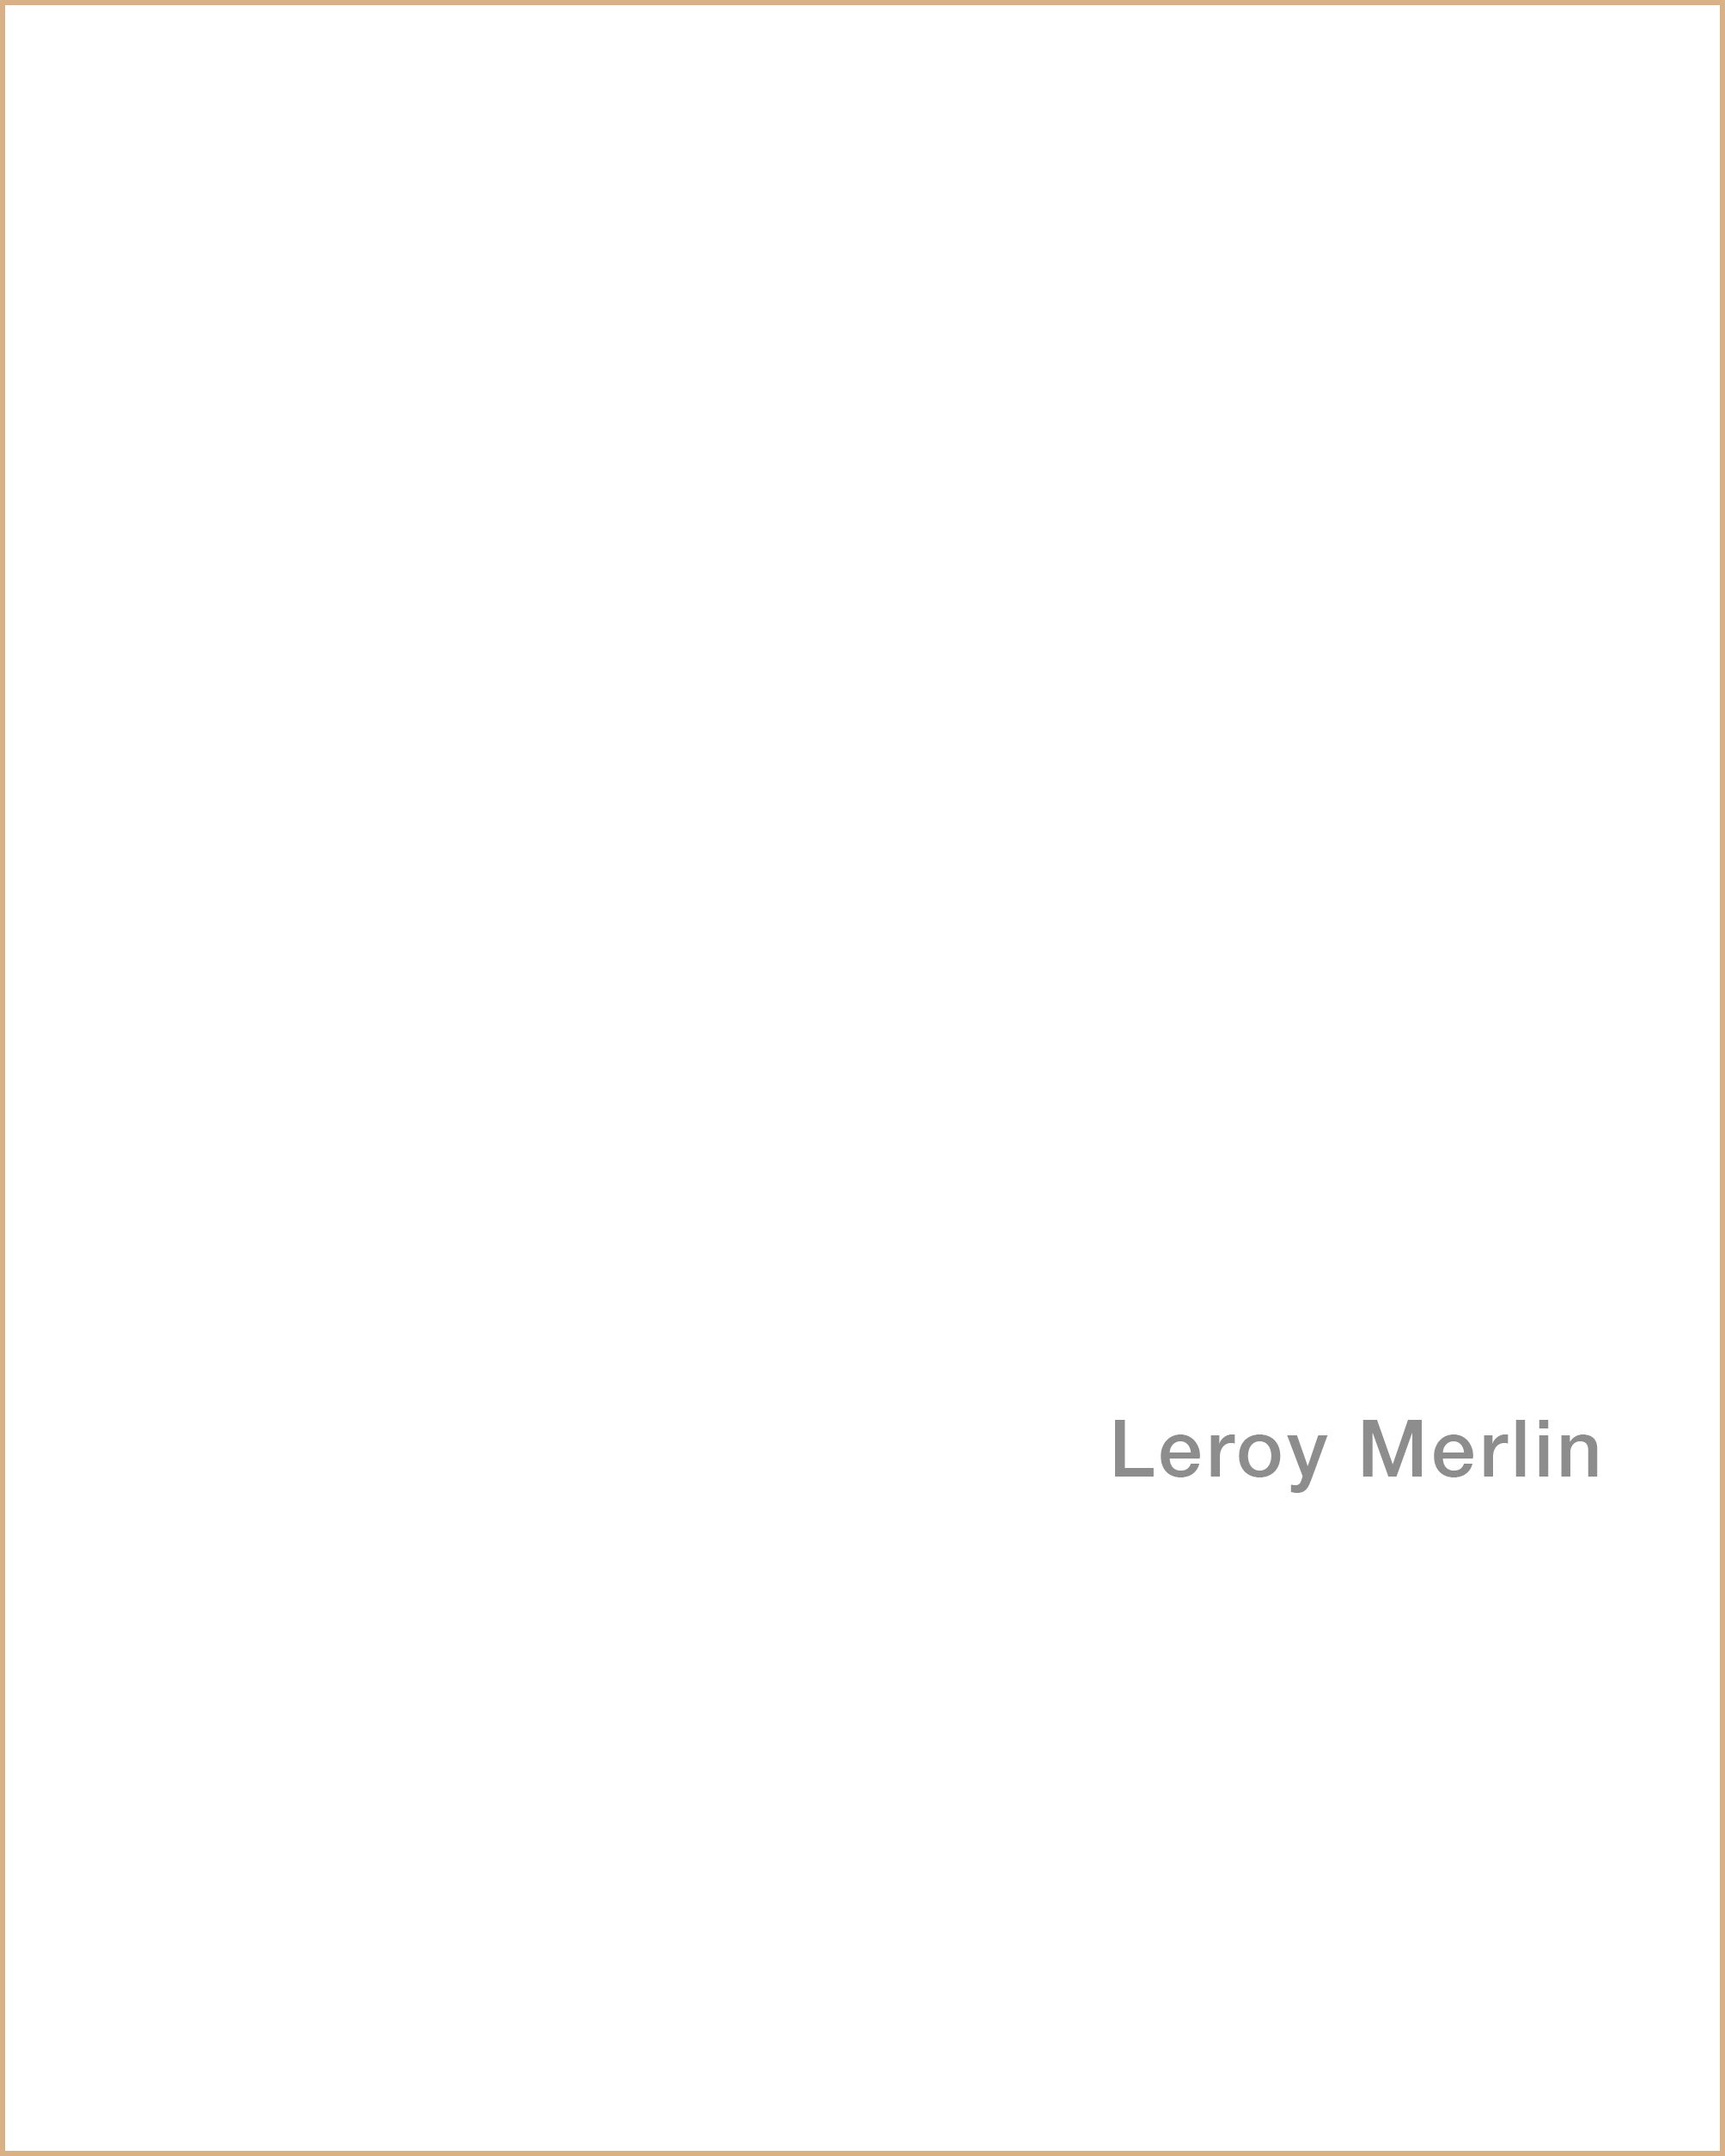 Leroy Merlin.jpg